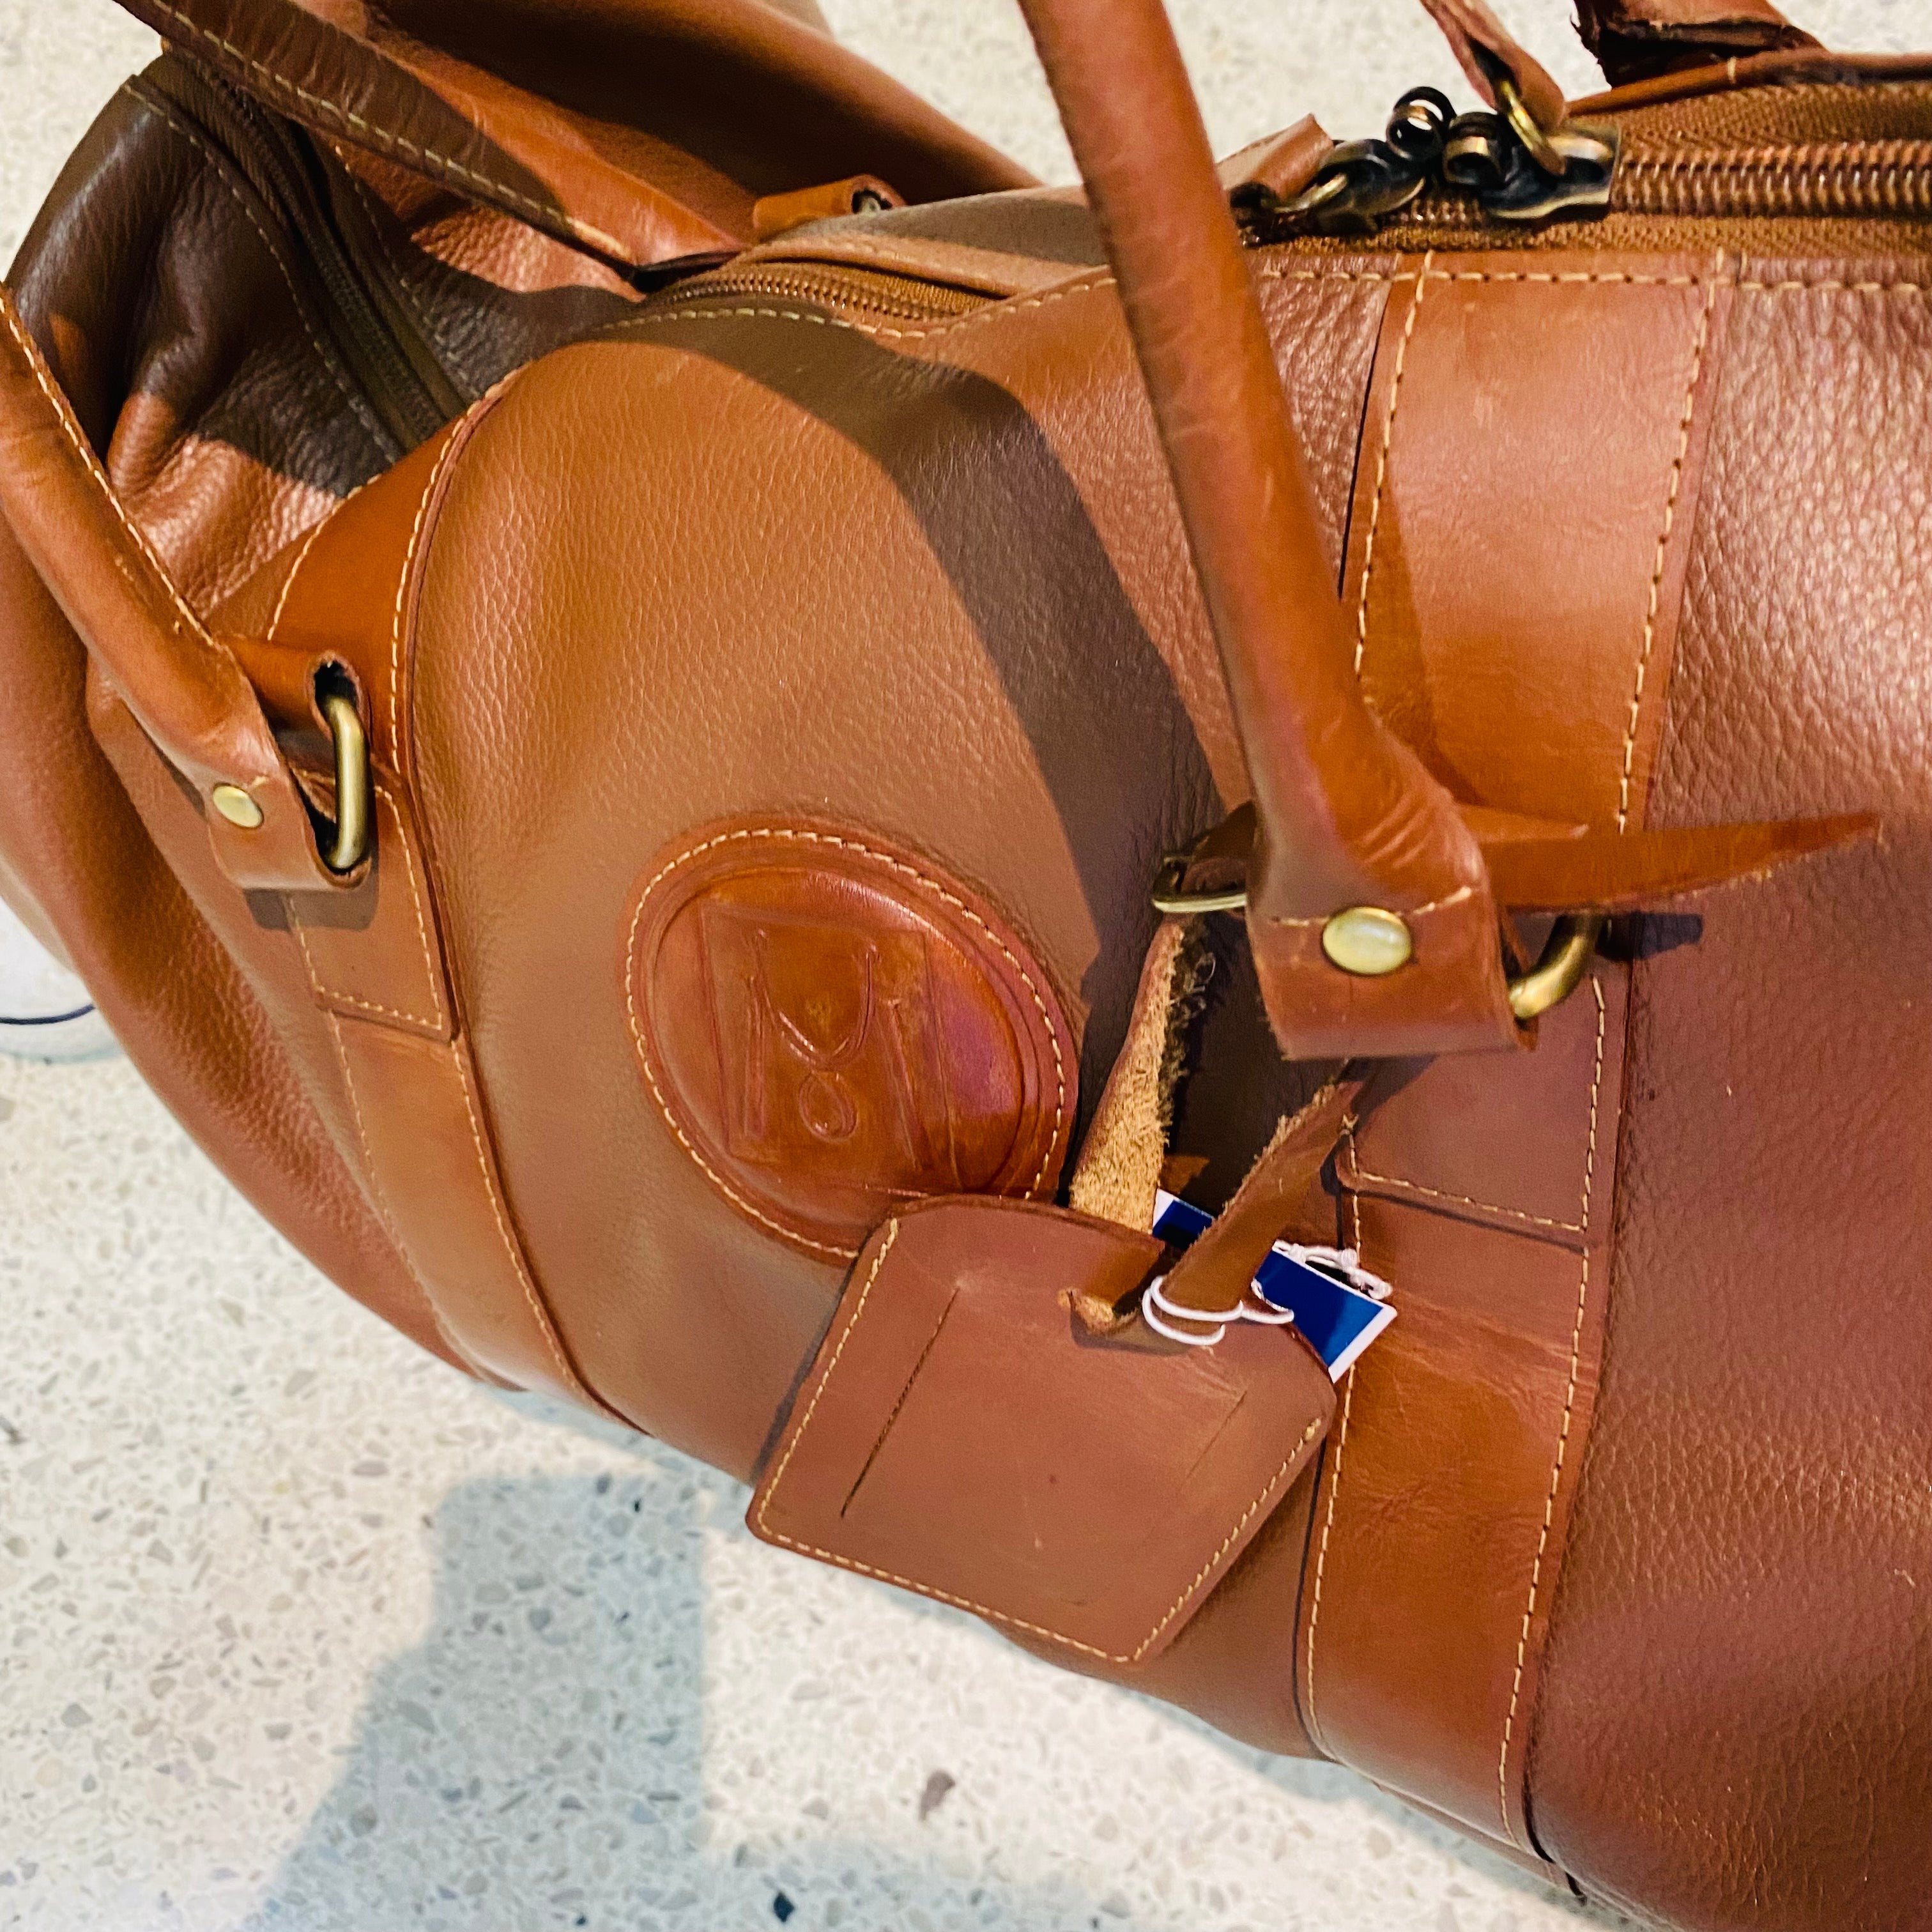 Millie’s Rolling Duffel/Travel Bags